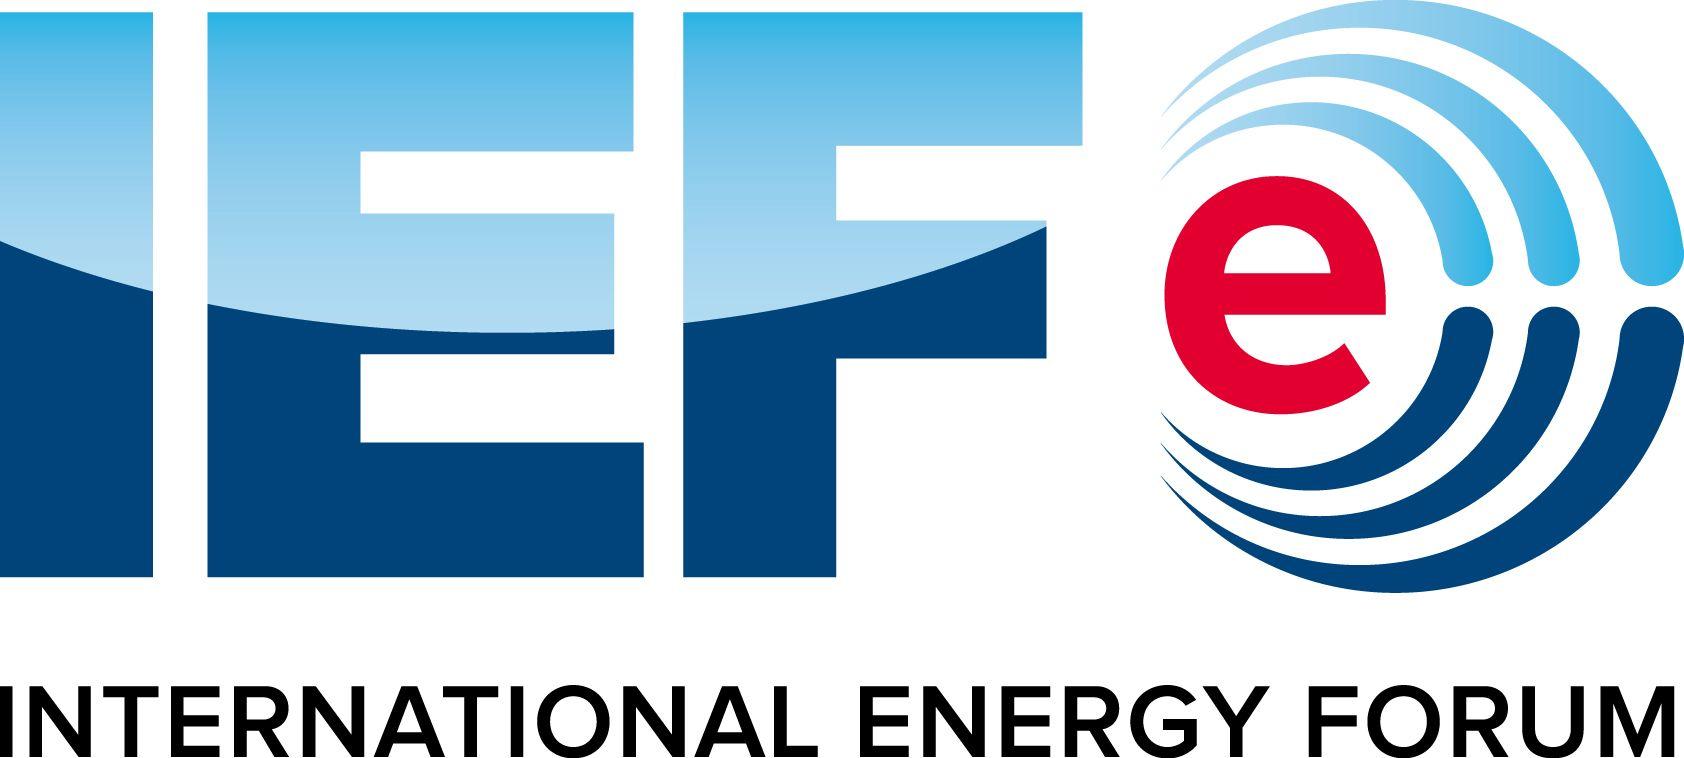 Forum Logo - International Energy Forum Logos and Brand Guidelines